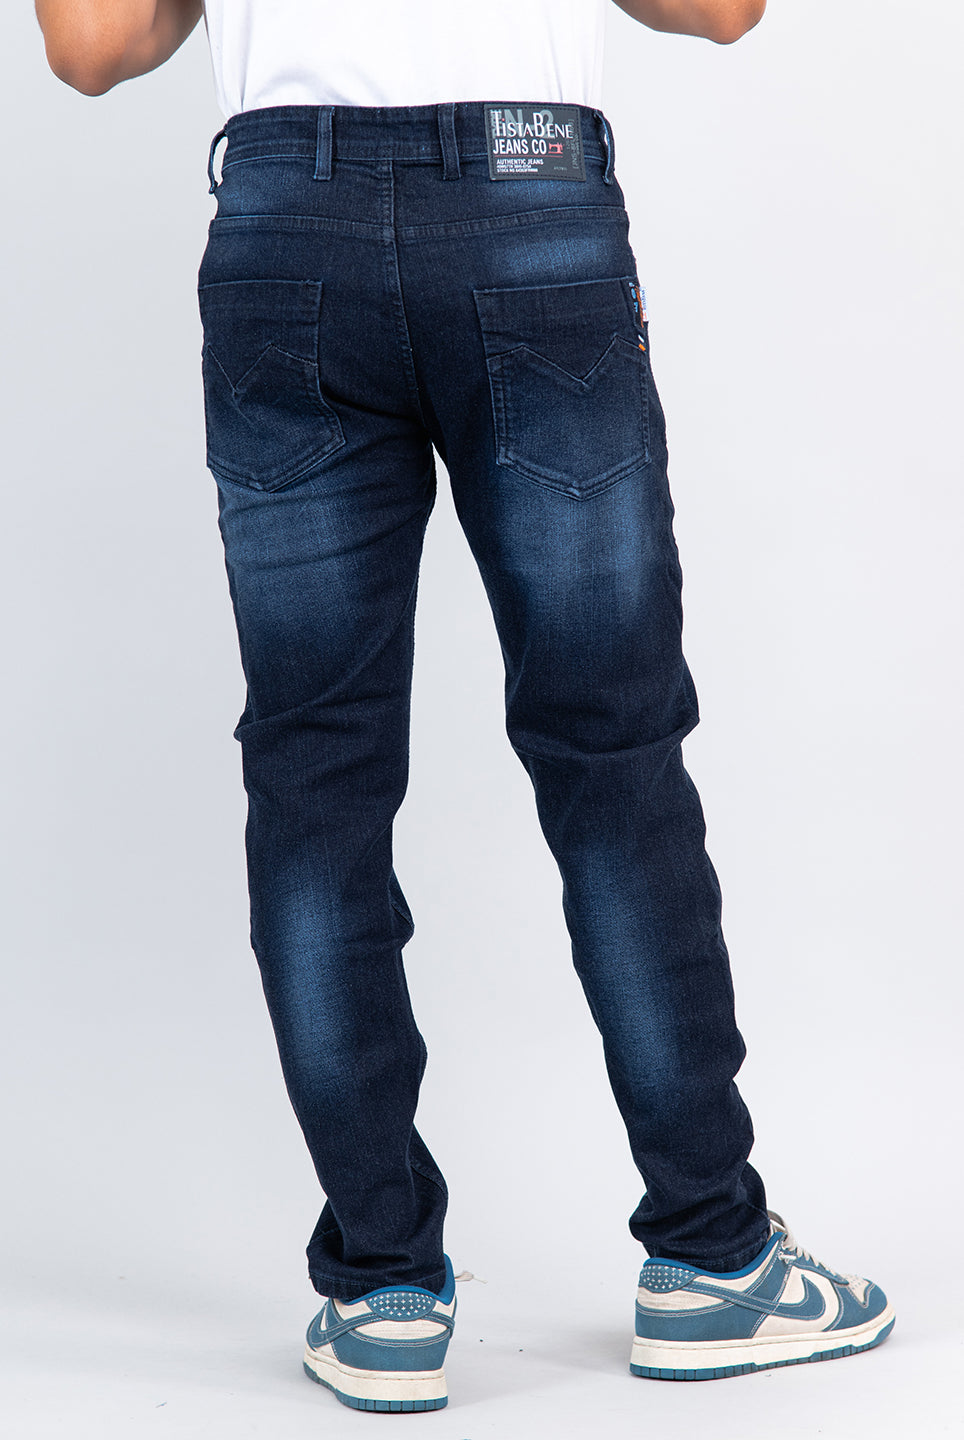 Dark blue denim jeans